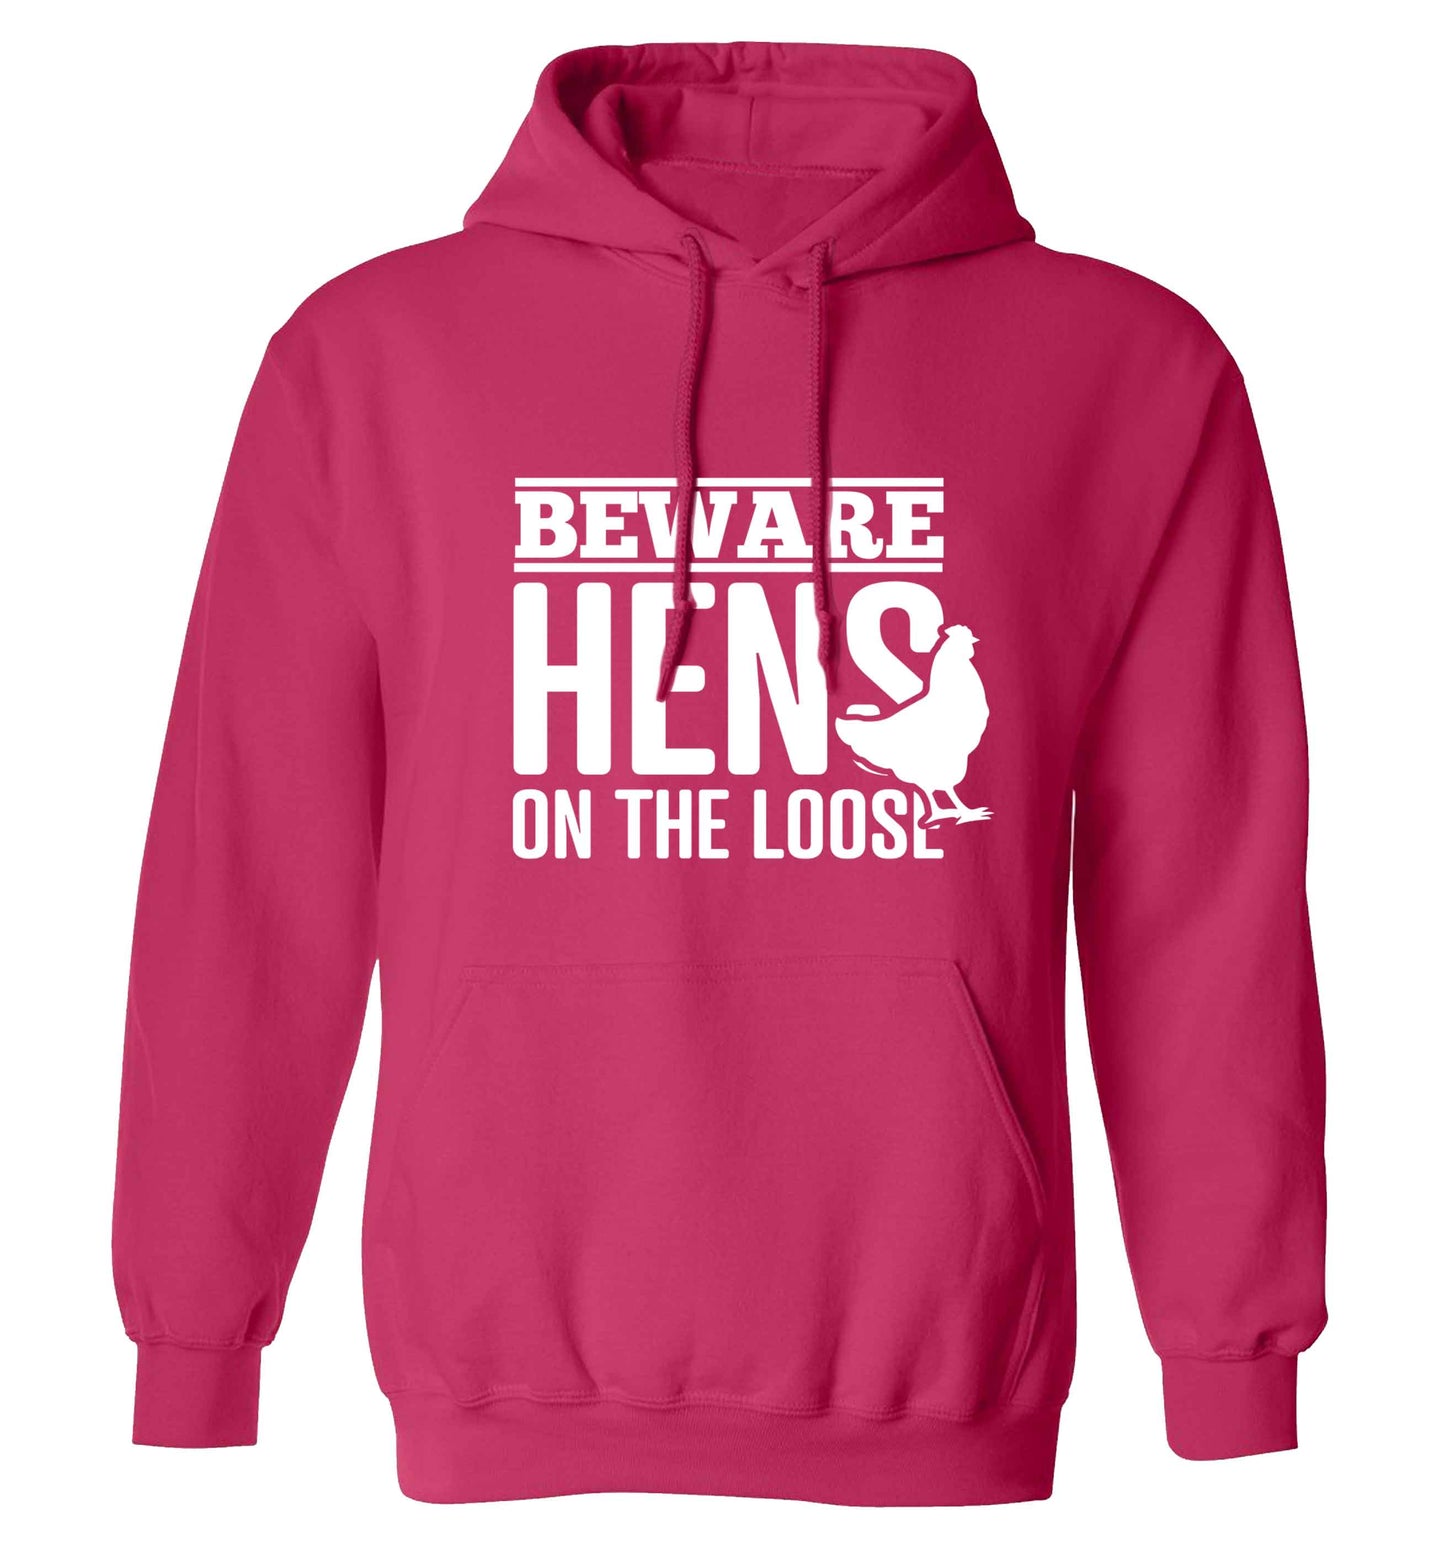 Beware hens on the loose adults unisex pink hoodie 2XL